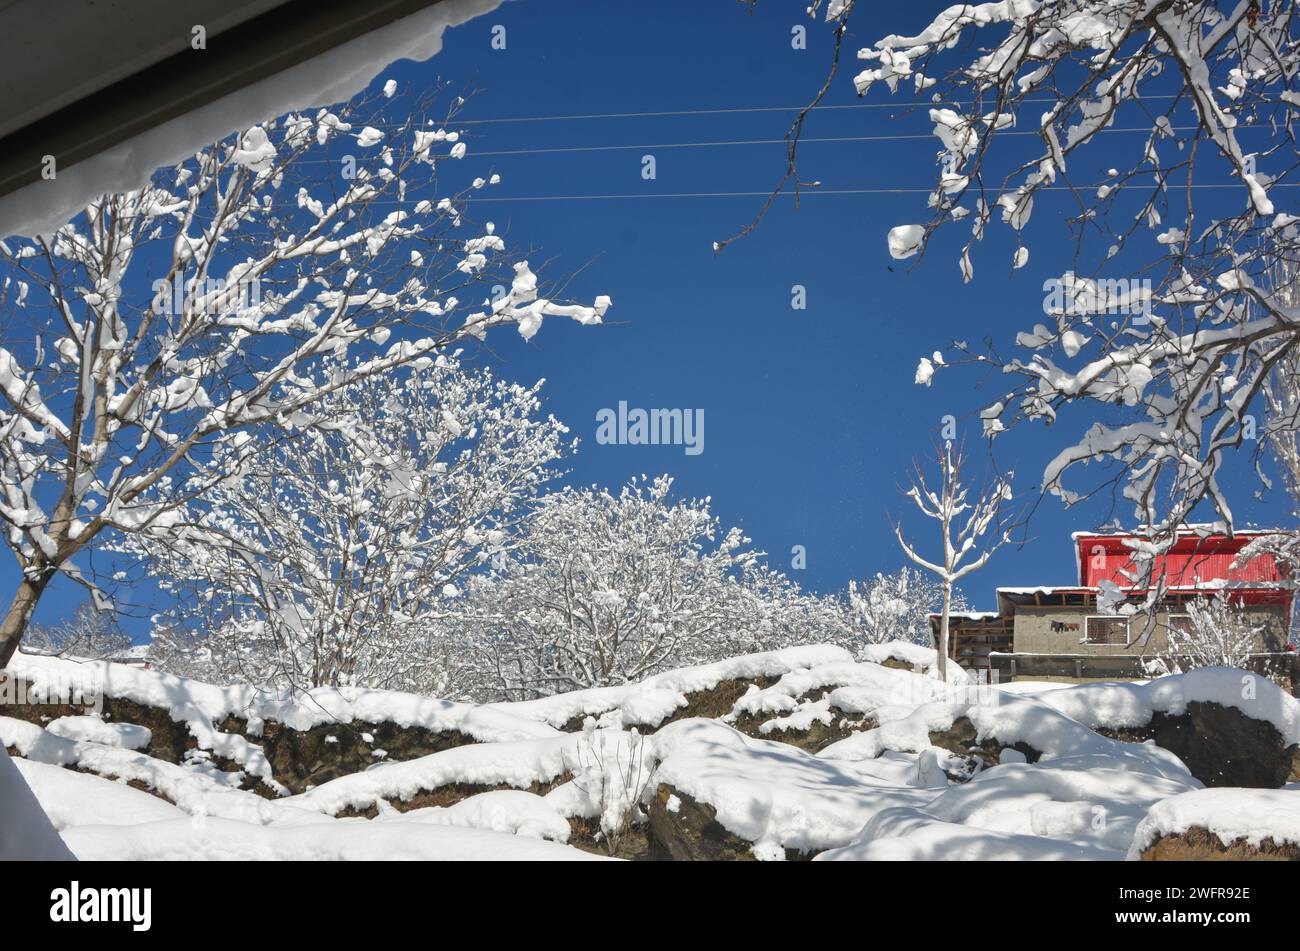 Beautiful clicks after heavy snowfalls in villages, snowfalls images, Stock Photo